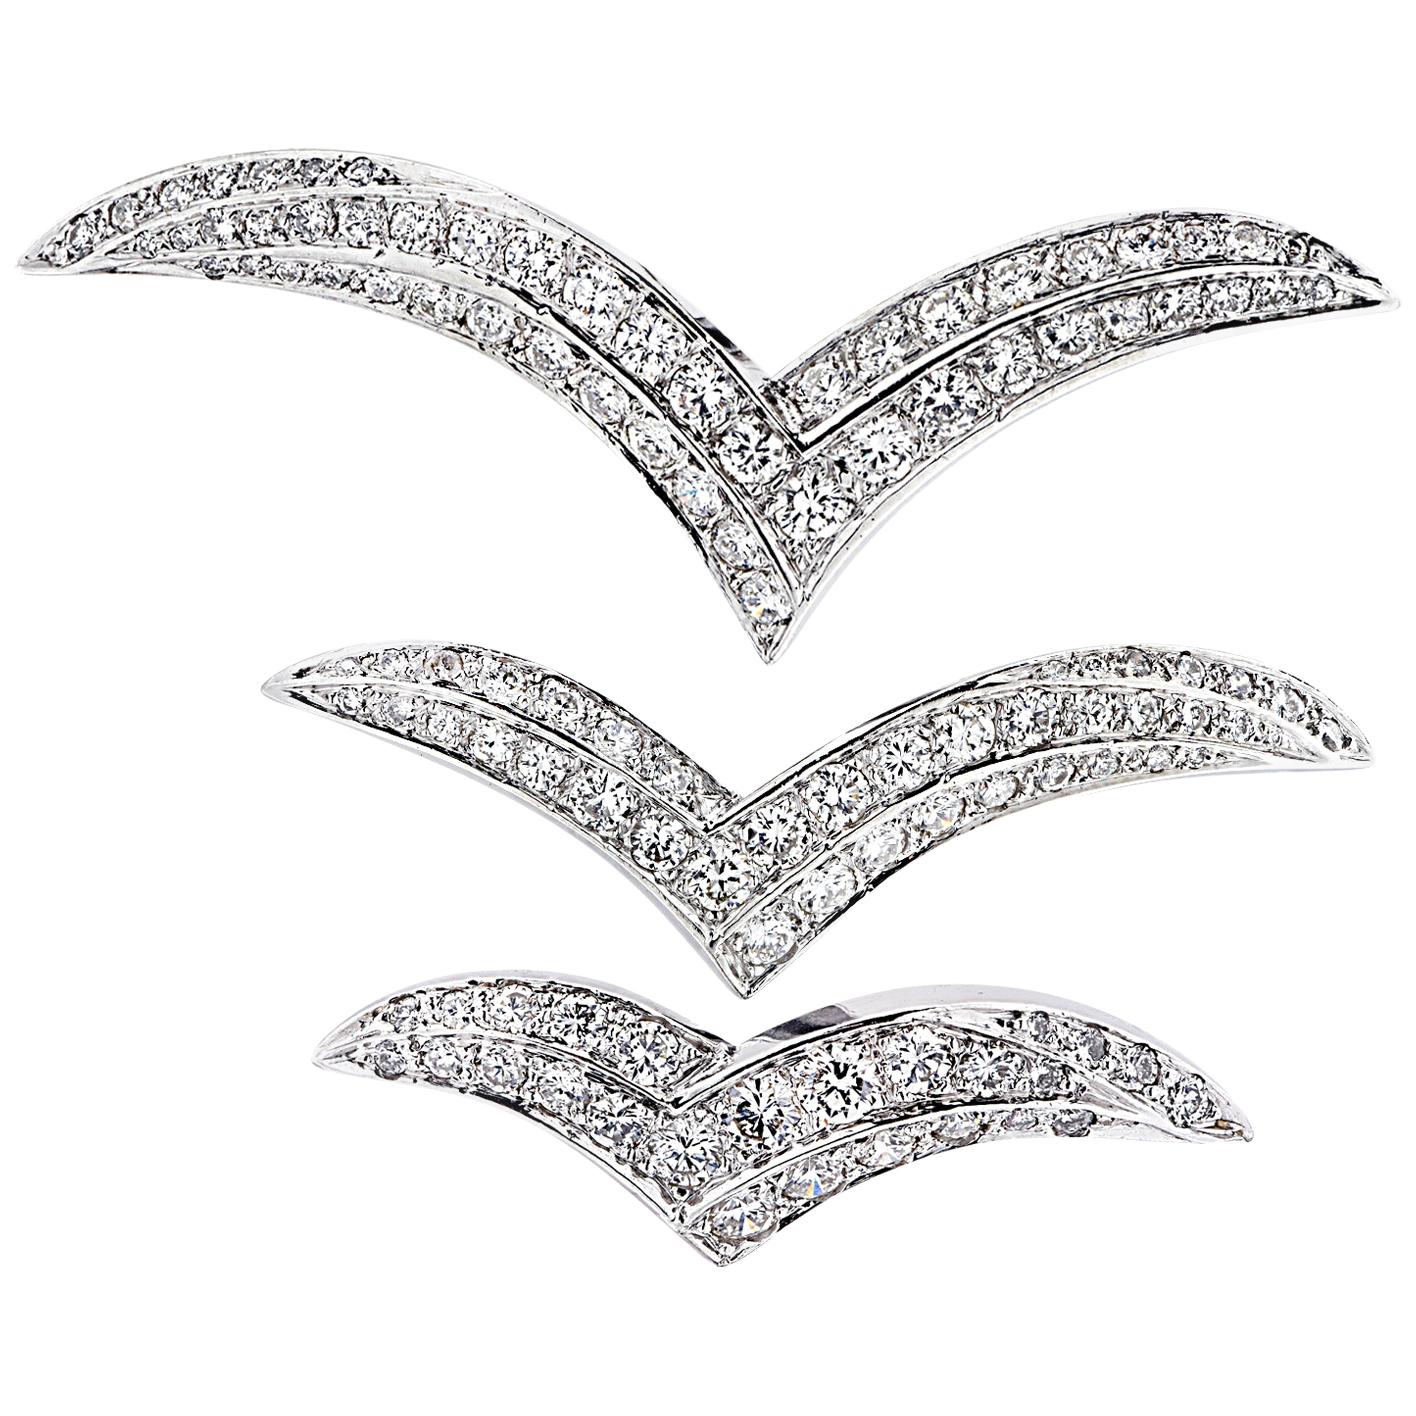 4 Carat Diamond Wing Brooch Pin Set